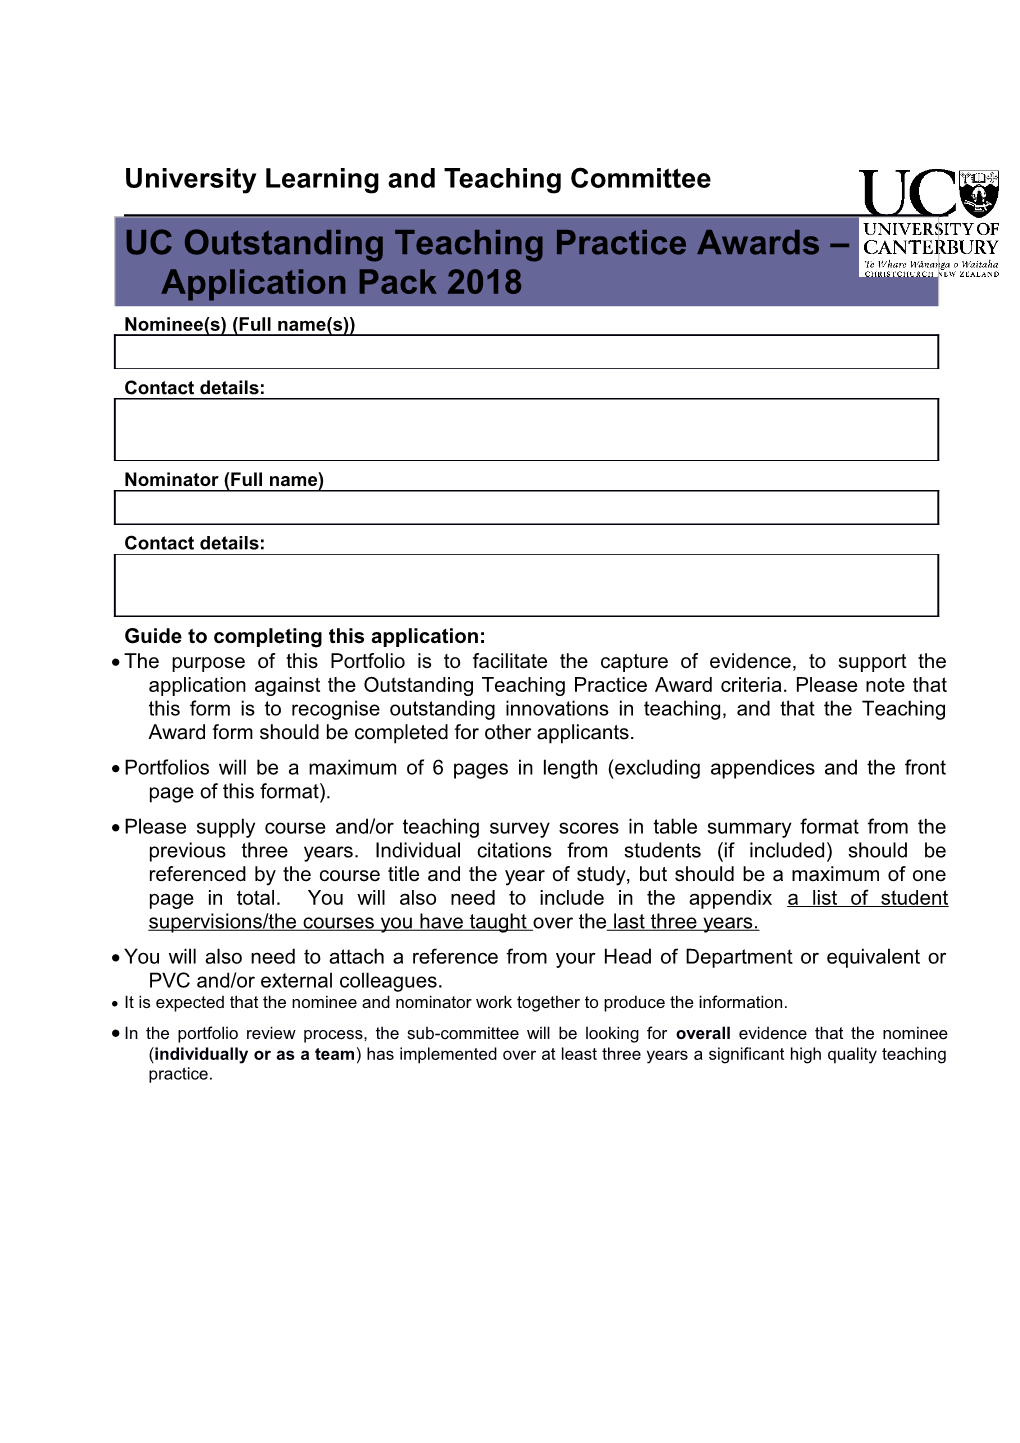 UC Outstanding Teaching Practiceawards Application Pack 2018